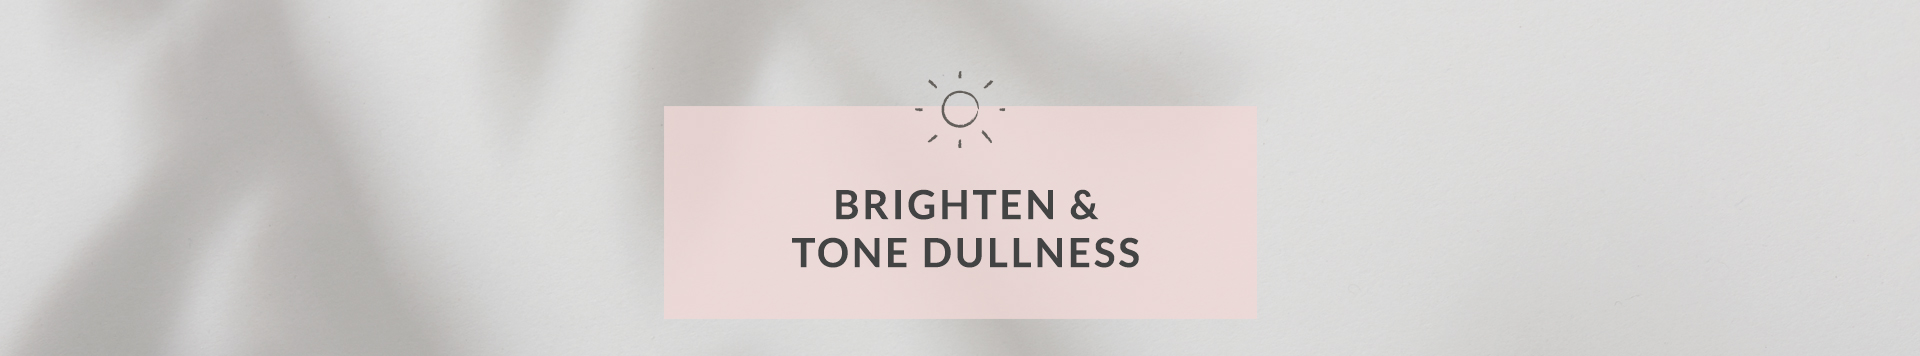 Brighten & Tone Dullness